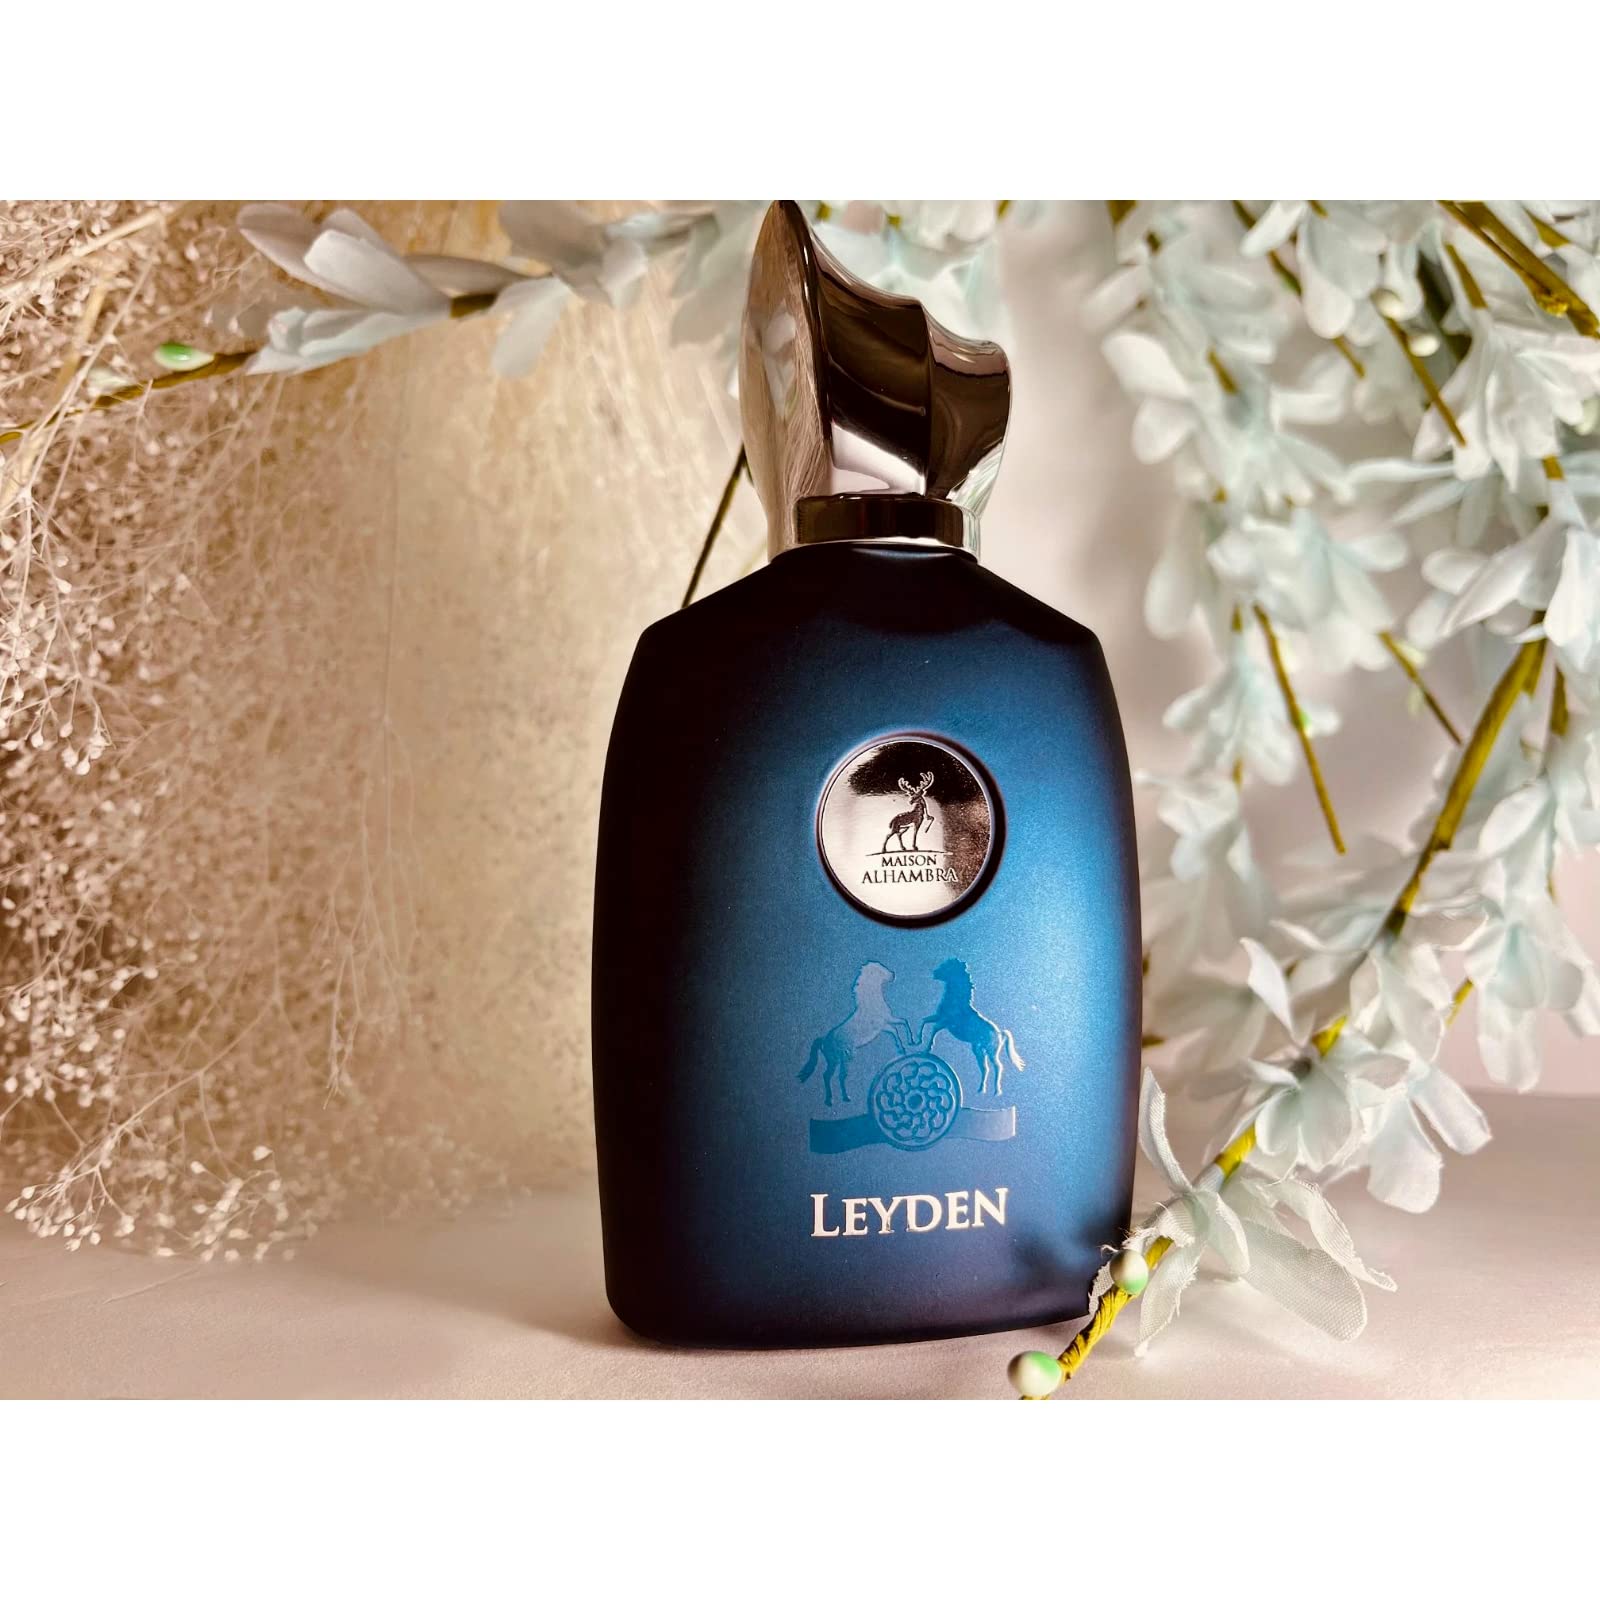 Leyden EDP Perfume By Maison Alhambra 100 ML, 3.40 Fl Oz (Pack of 1)